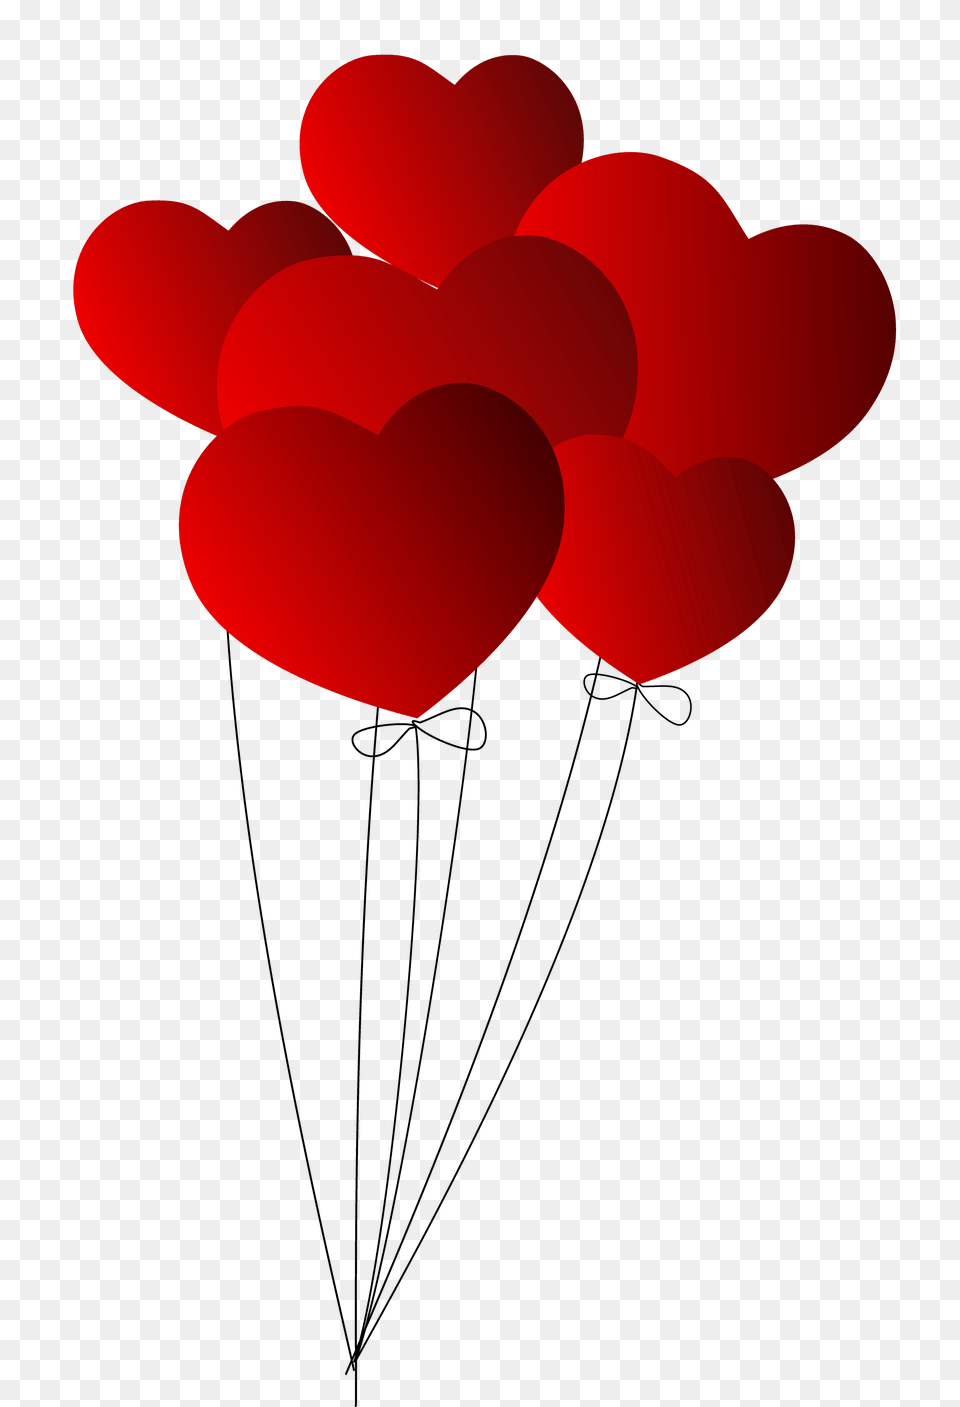 Pngpix Com Heart Balloon Image, Carnation, Flower, Petal, Plant Png